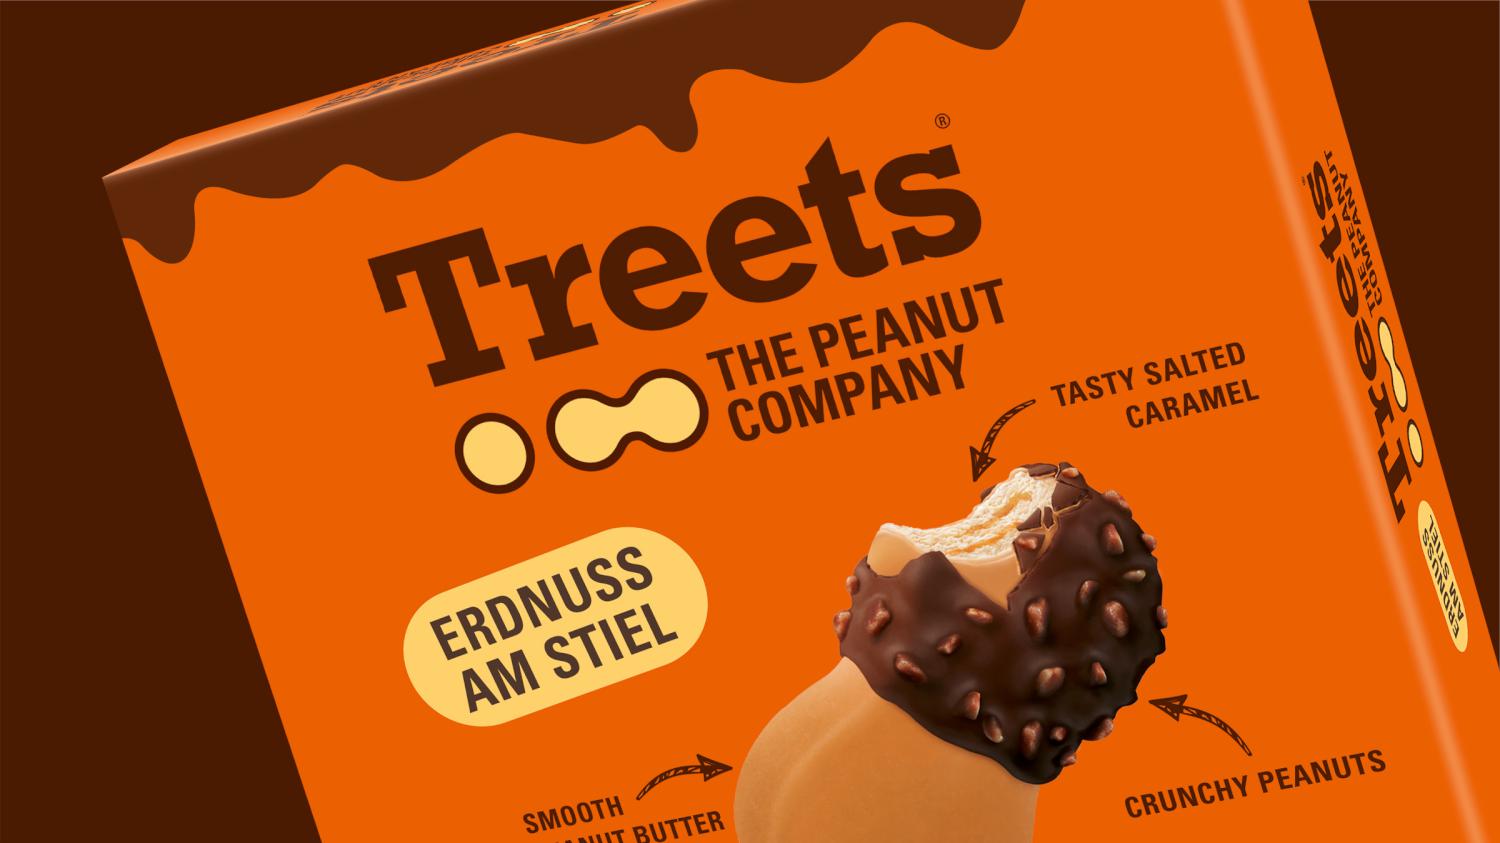 Treets Peanut Company Eis Launch Grafikdesign Branding-Strategie Verpackungsdesign Logodesign Line Extension